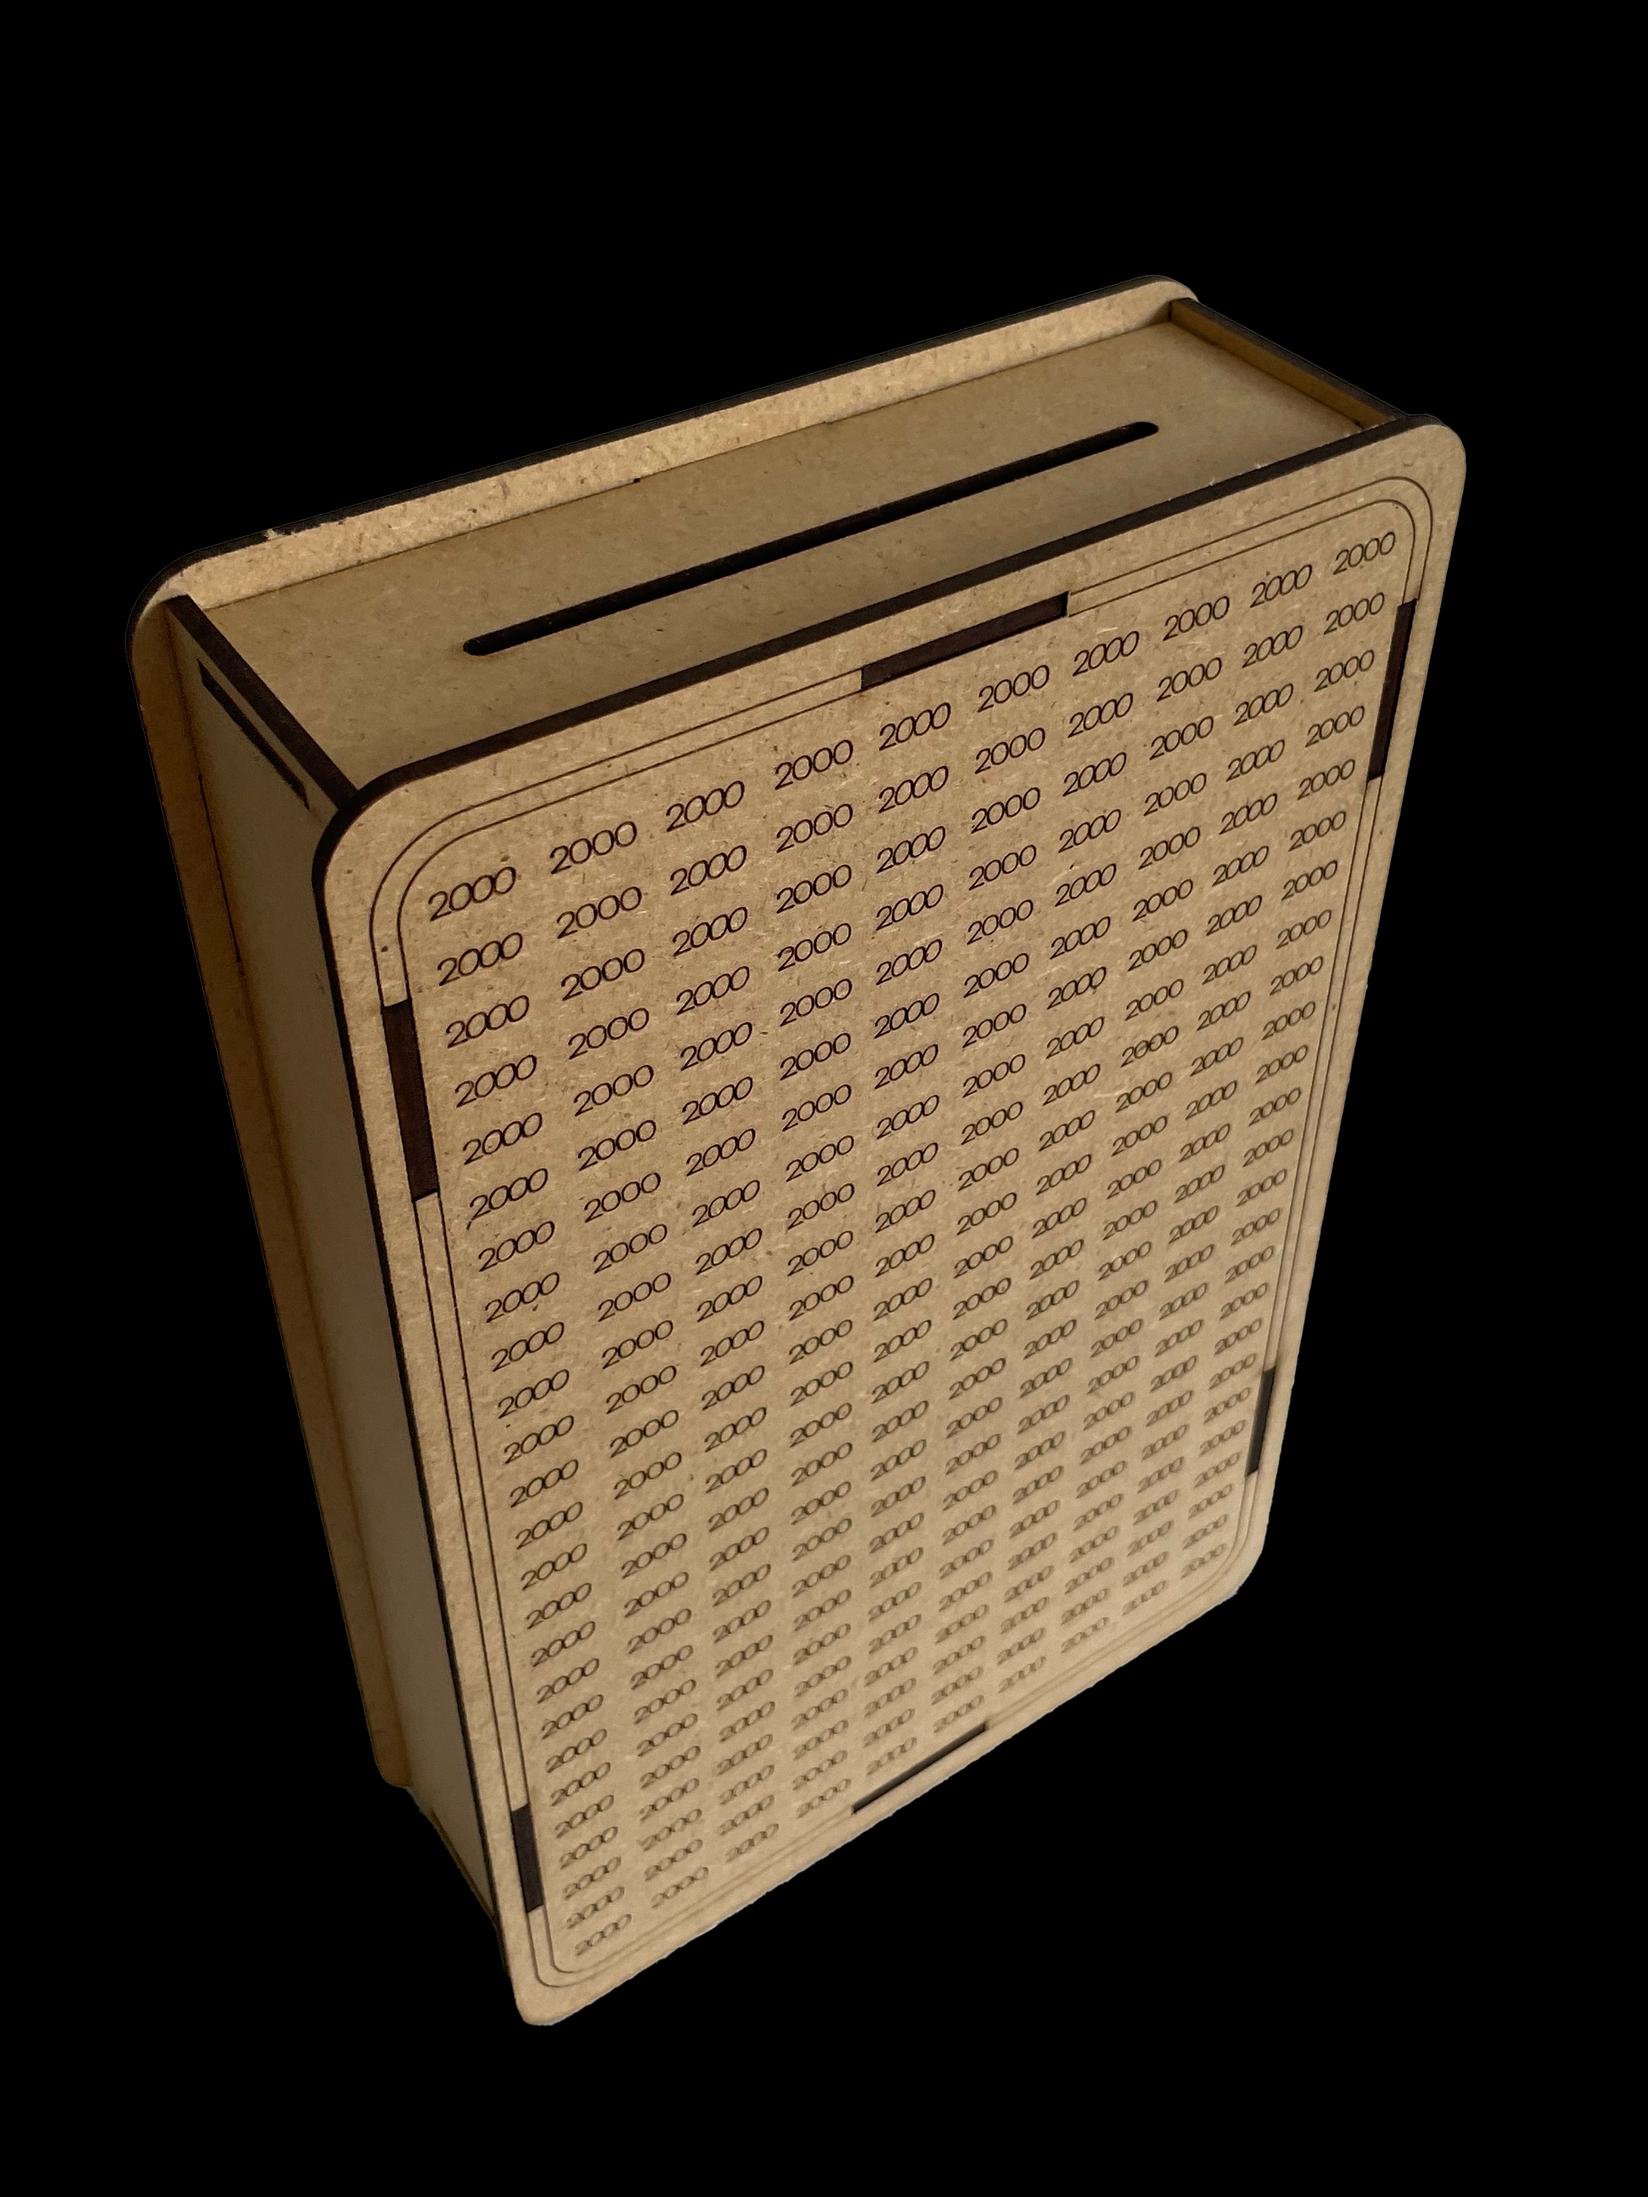 Selected image for EPIC PRODUCTION Poklon kasica prasica interaktivni izazov 2000 RSD x 250 (500K RSD) smeđa